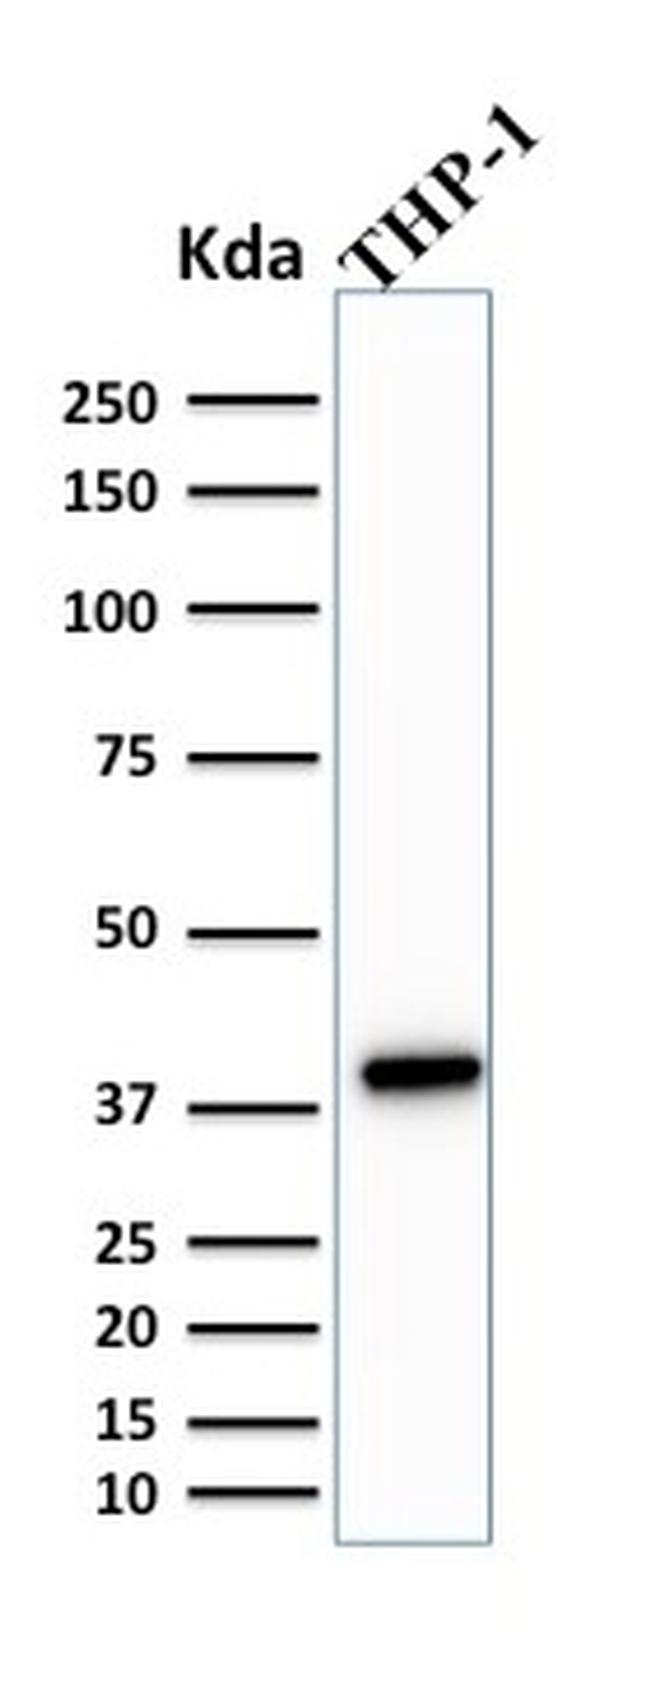 PU.1 (SPI-1) Antibody in Western Blot (WB)